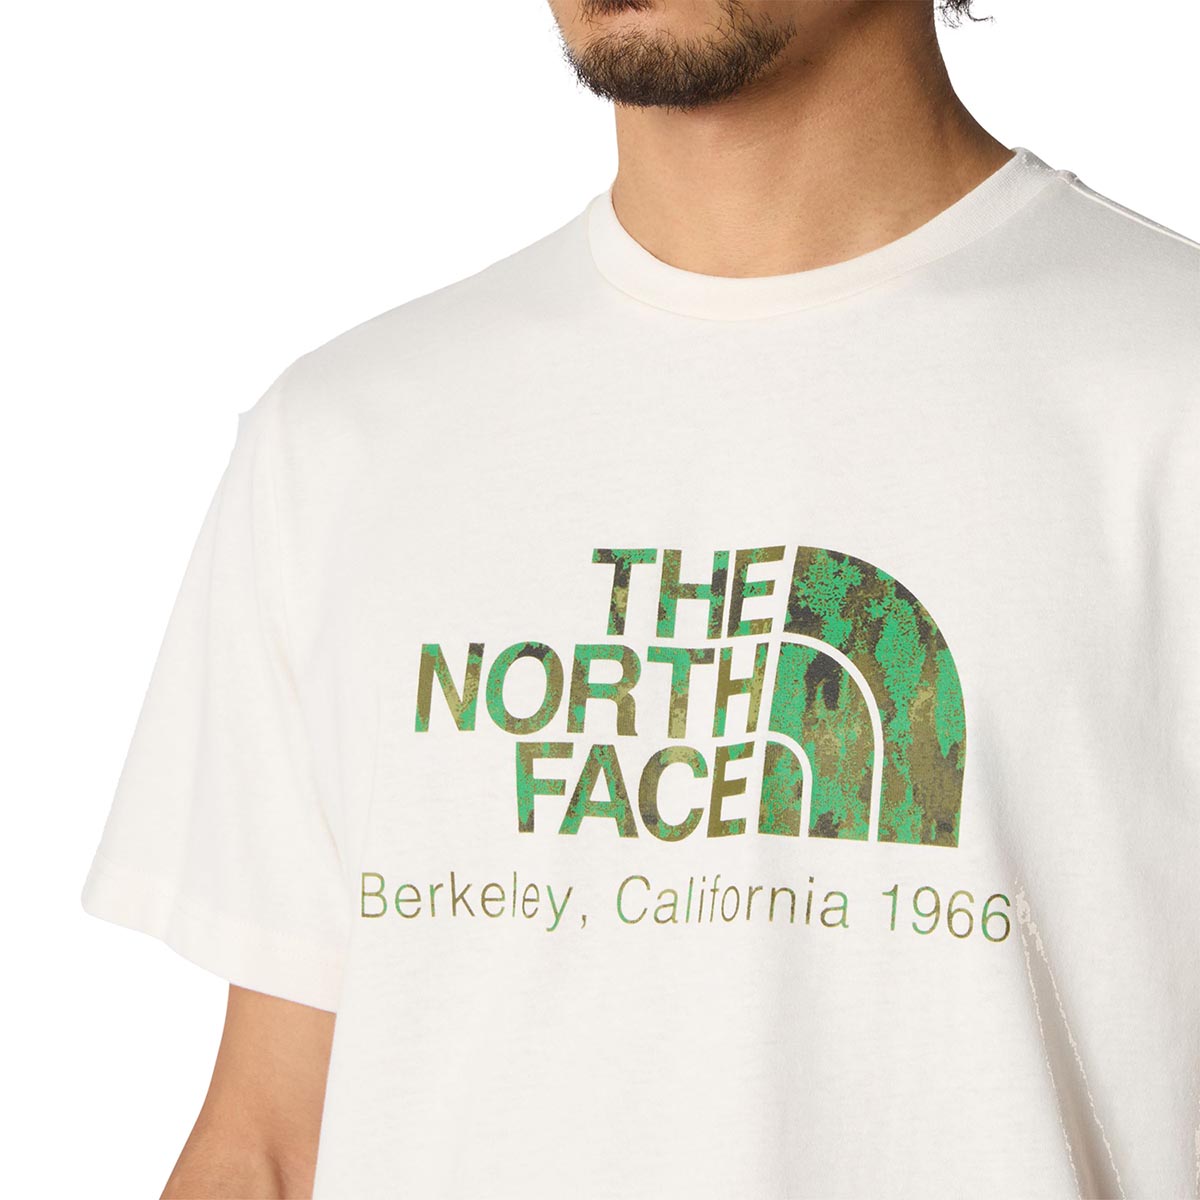 THE NORTH FACE - BERKELEY CALIFORNIA